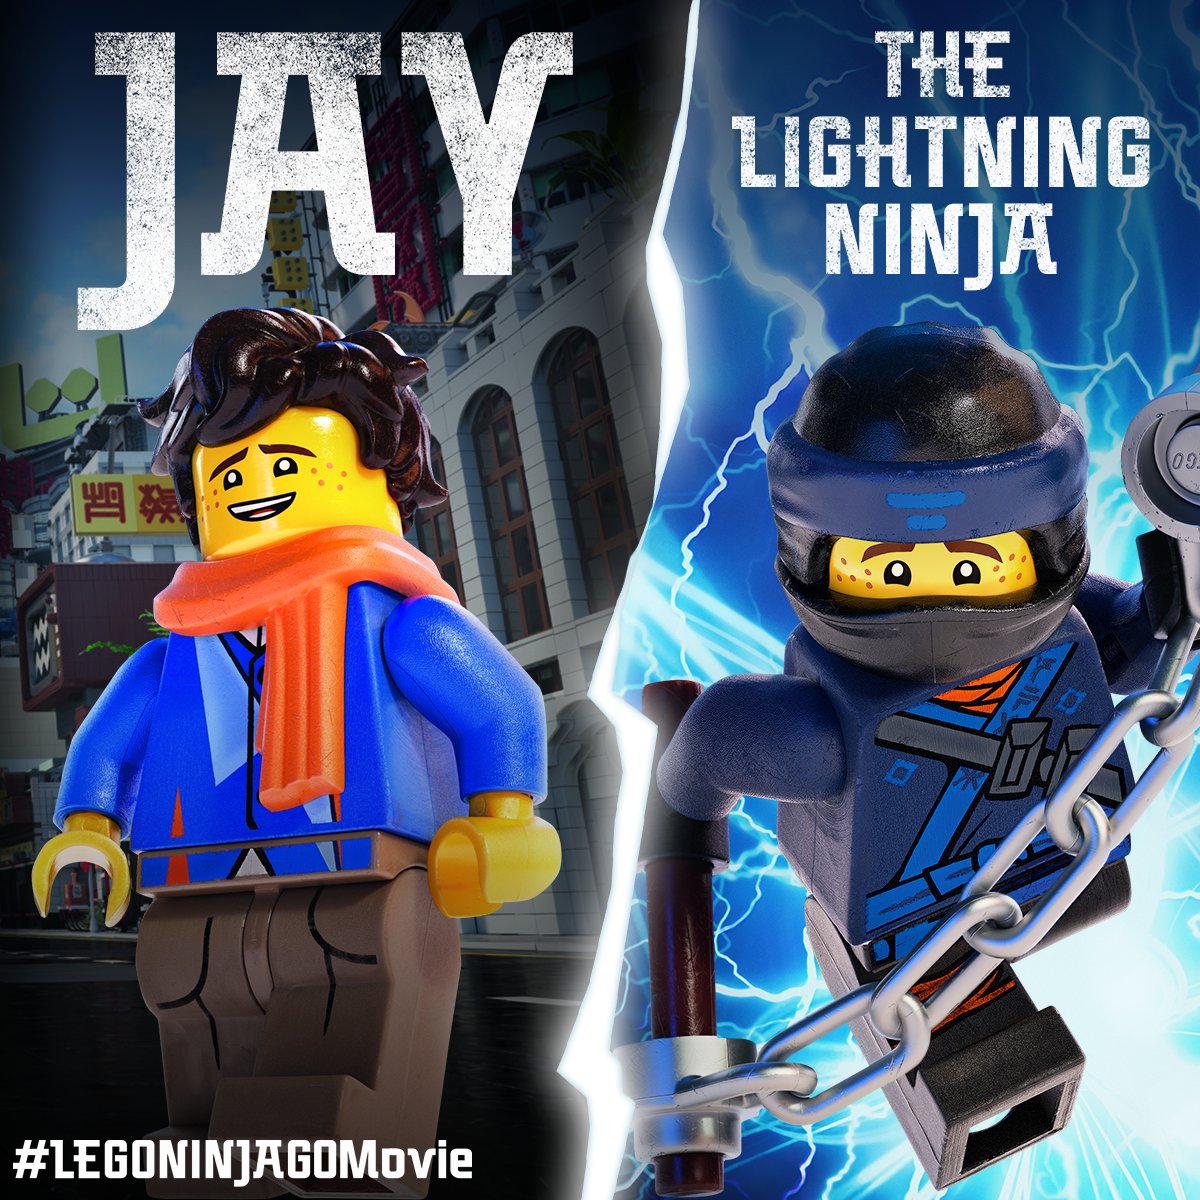 LEGO NINJAGO Movie on Twitter: "Jay can strike the same place twice⚡️⚡️  #LEGONINJAGOMovie! https://t.co/ubCDchsIQJ" / Twitter